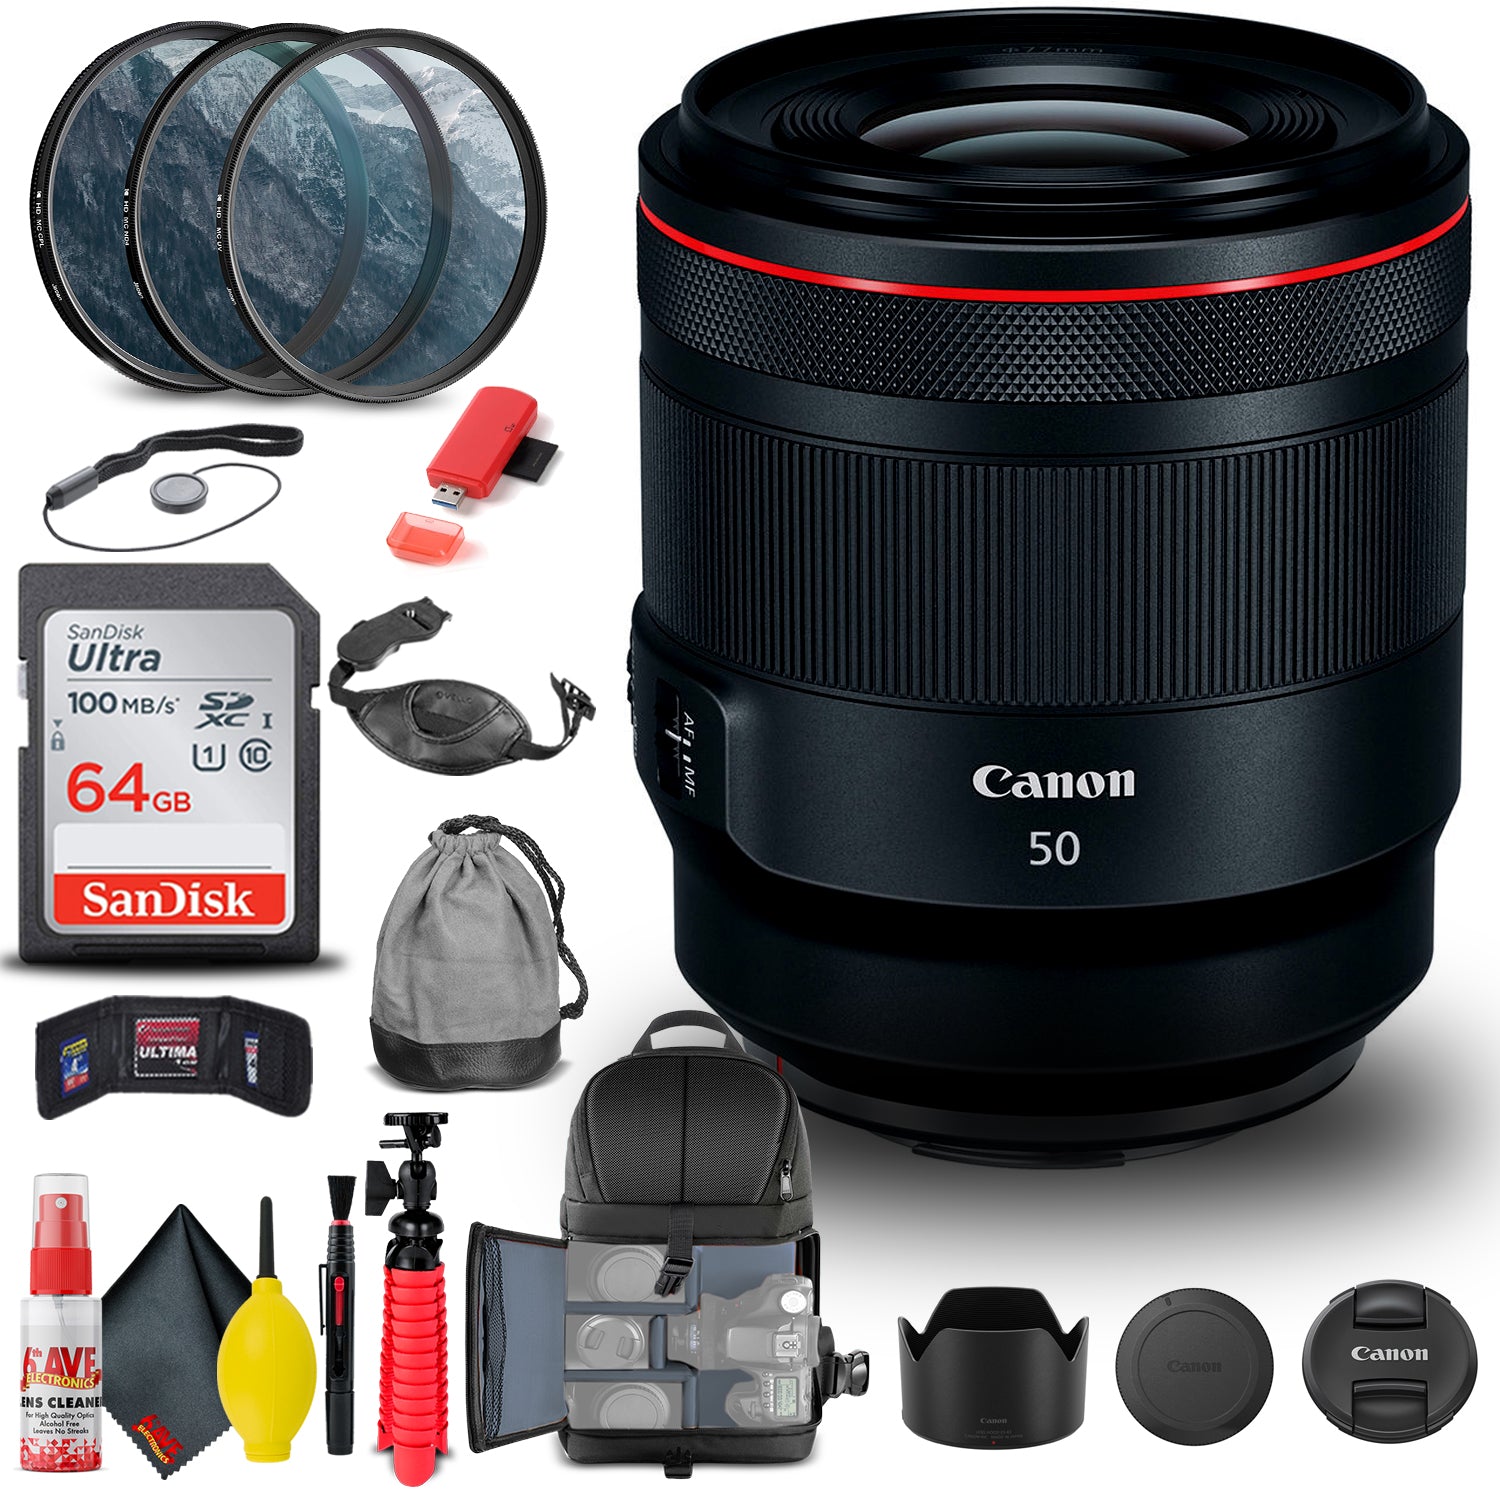 Canon RF 50mm f/1.2L USM Lens (2959C002) + Filter + BackPack + 64GB Card + More